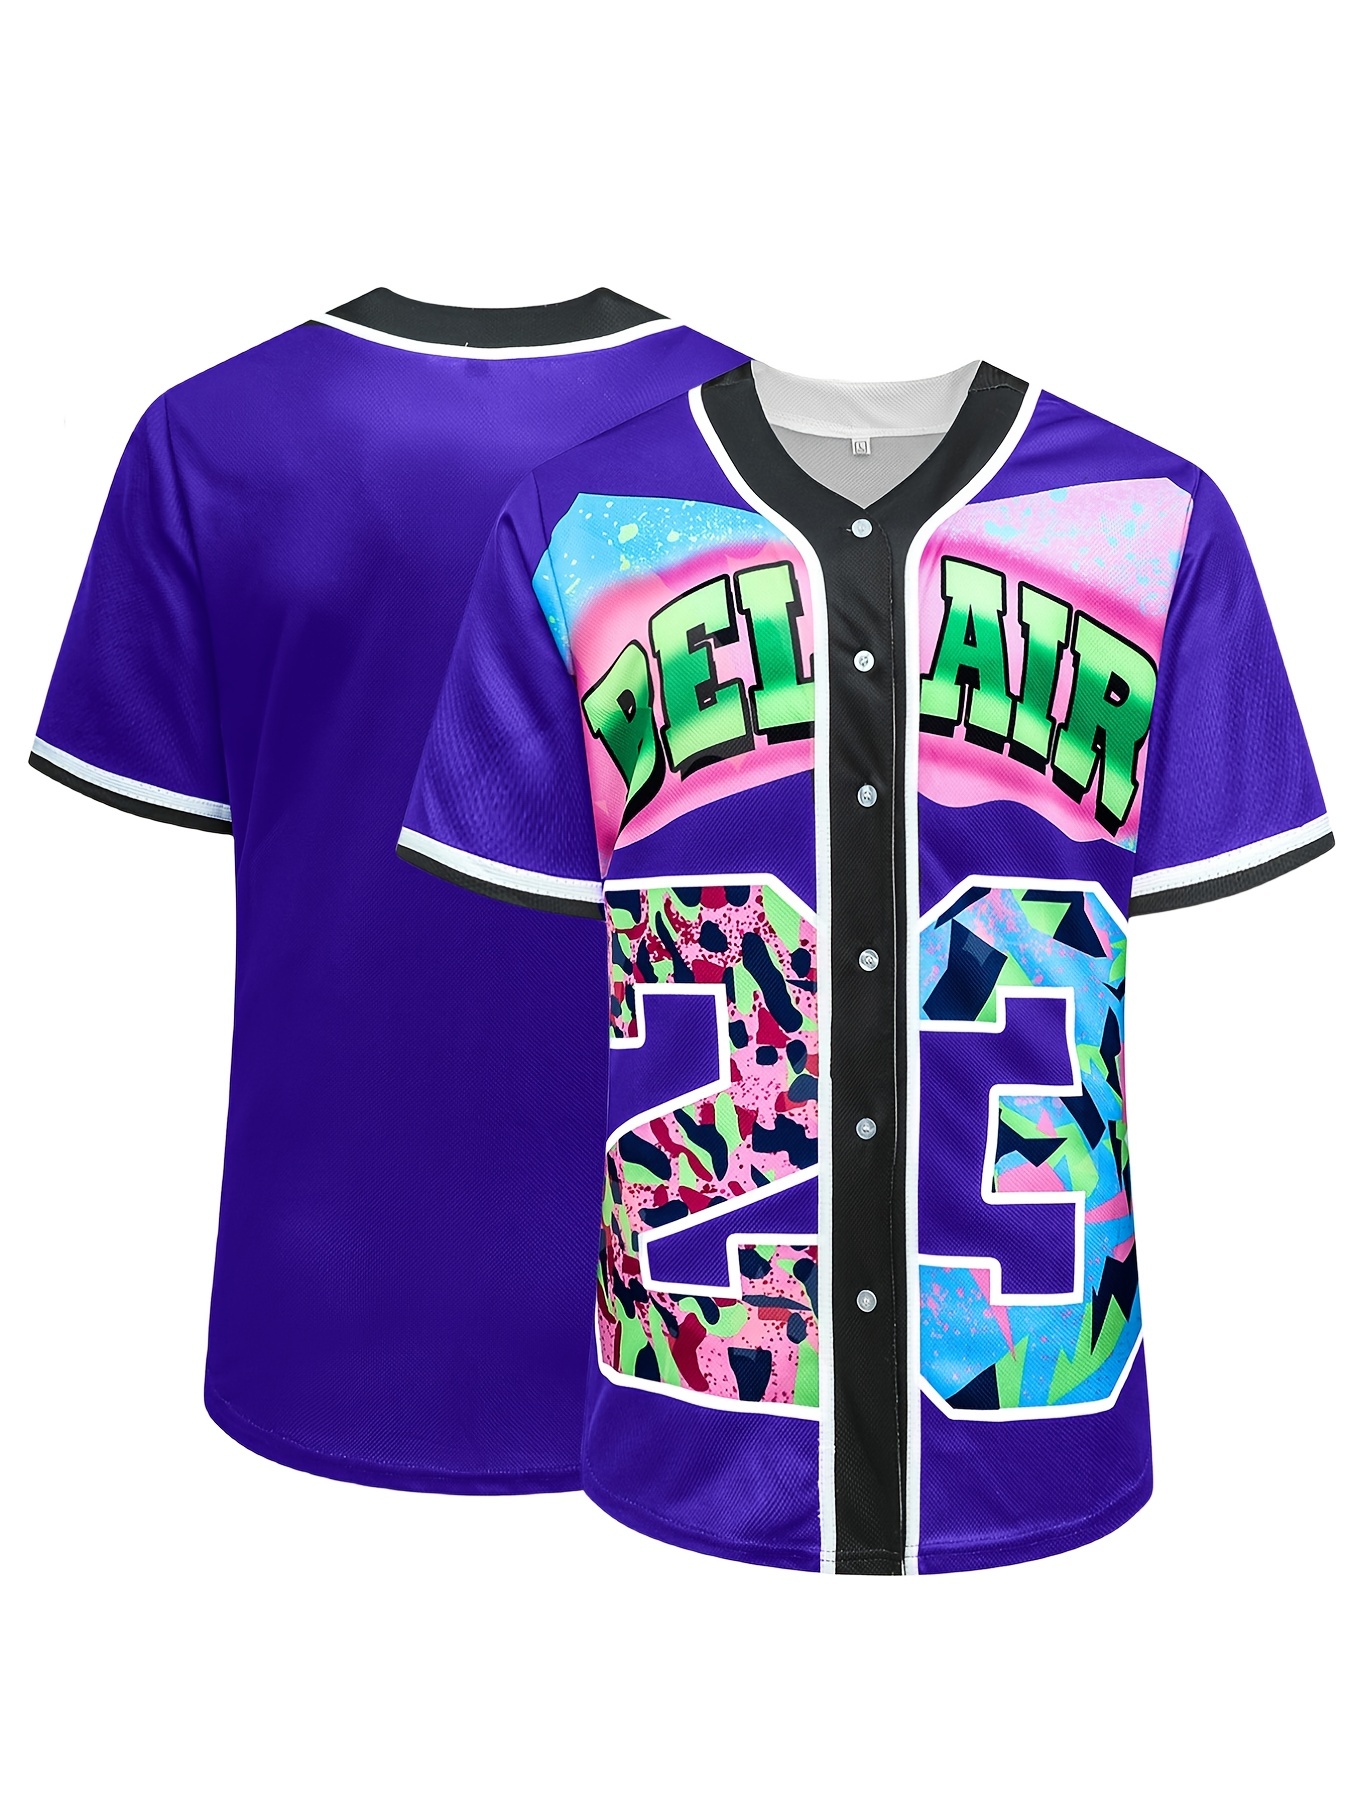 Women's Retro Purple 23 Baseball Jersey, Hip Hop 90s Outfit